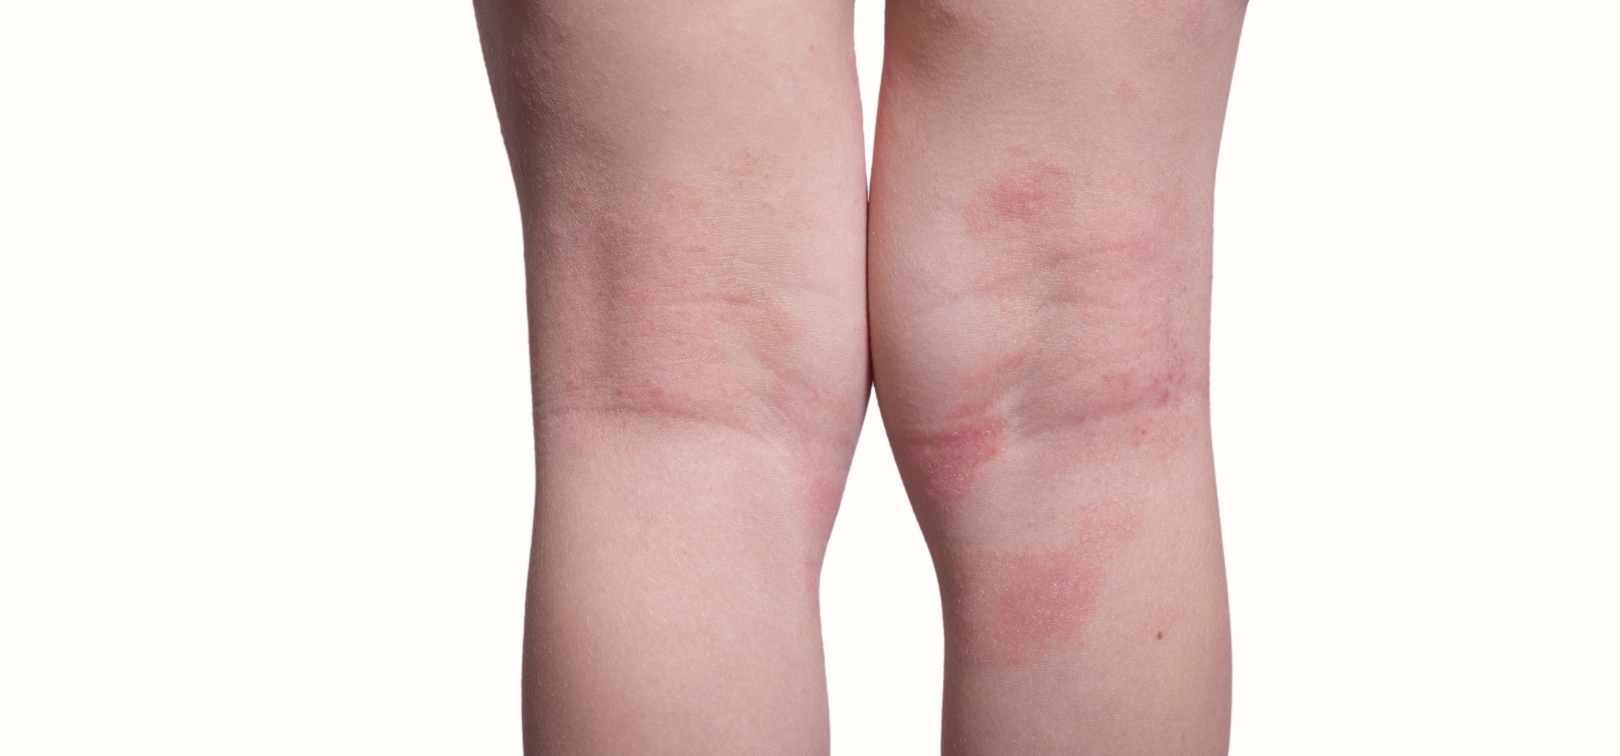 eczema example image